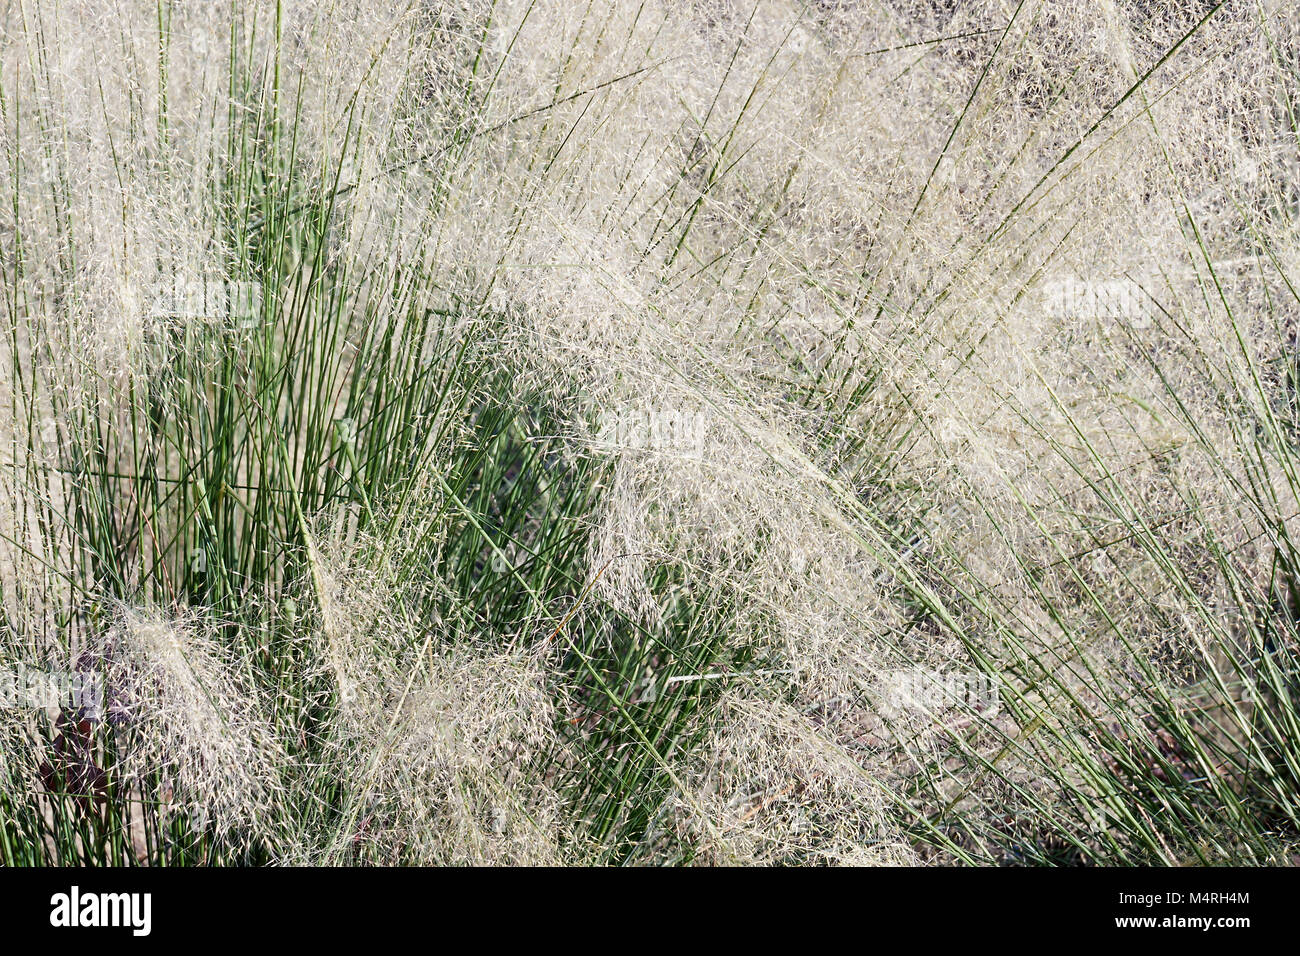 White Cloud muhly grass (Muhlenbergia capillaris White Cloud) Stock Photo